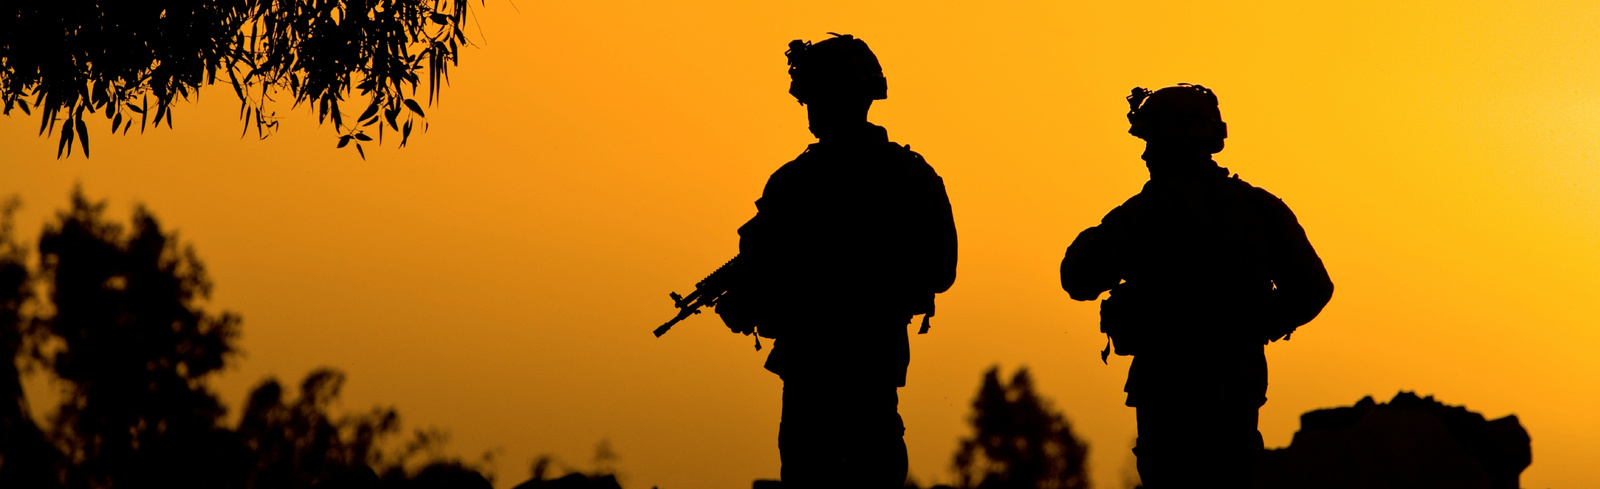 Silhouette of soldiers against orange sky